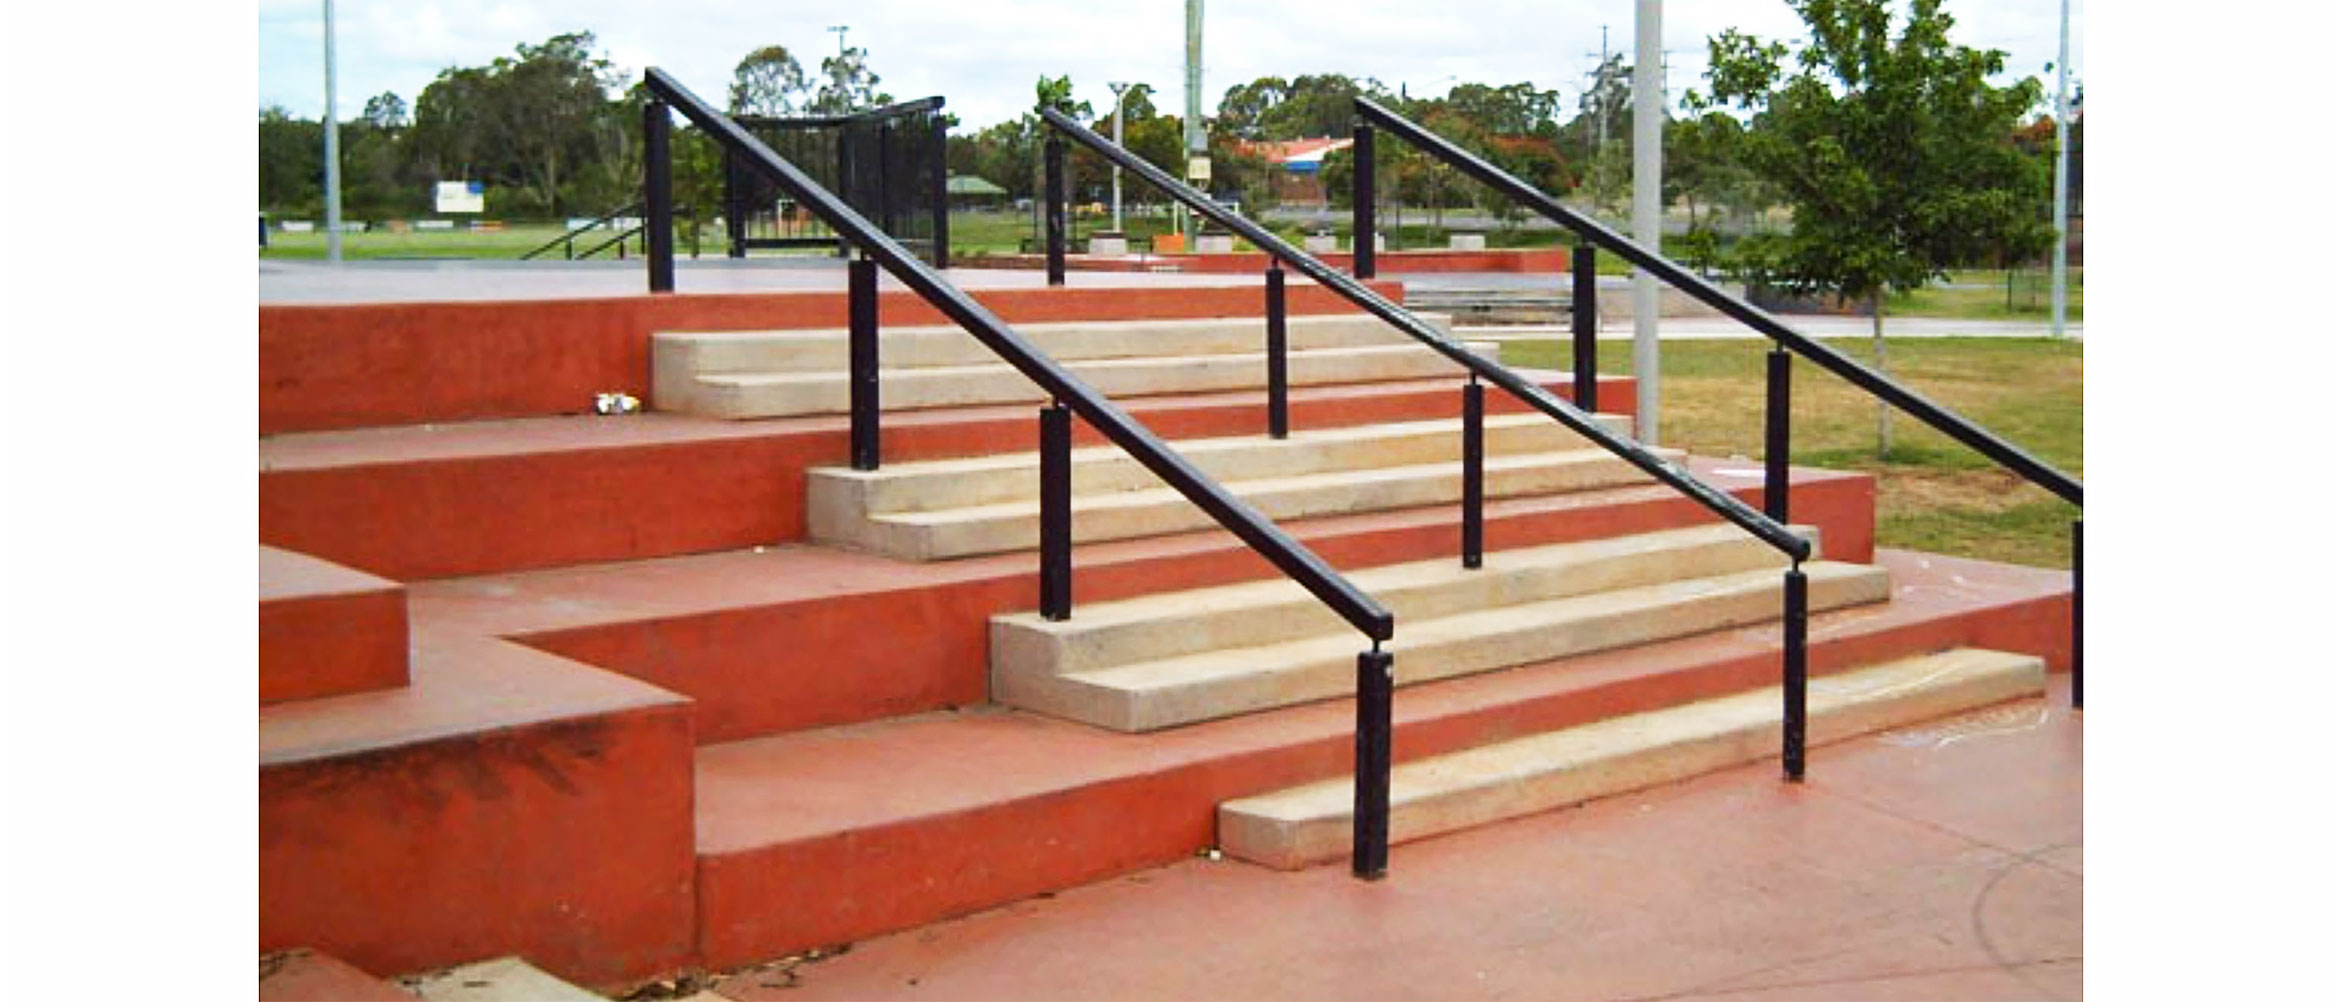 Big rail, Capalaba skate park street section, Concrete Skateparks build